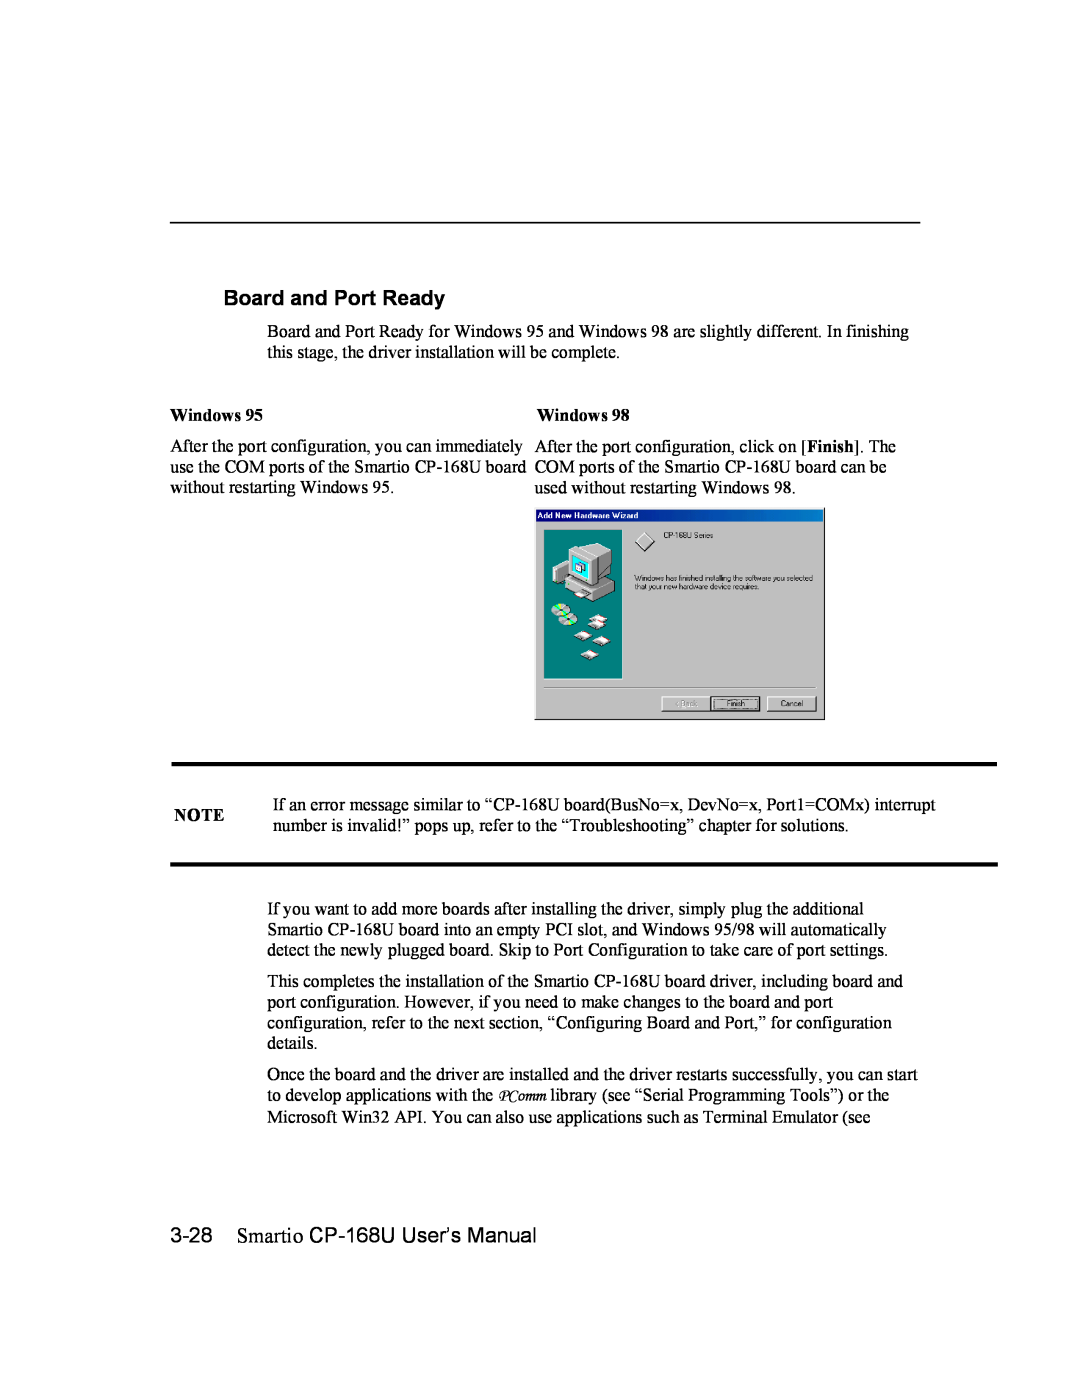 Moxa Technologies user manual Smartio CP-168U User’s Manual, Board and Port Ready 